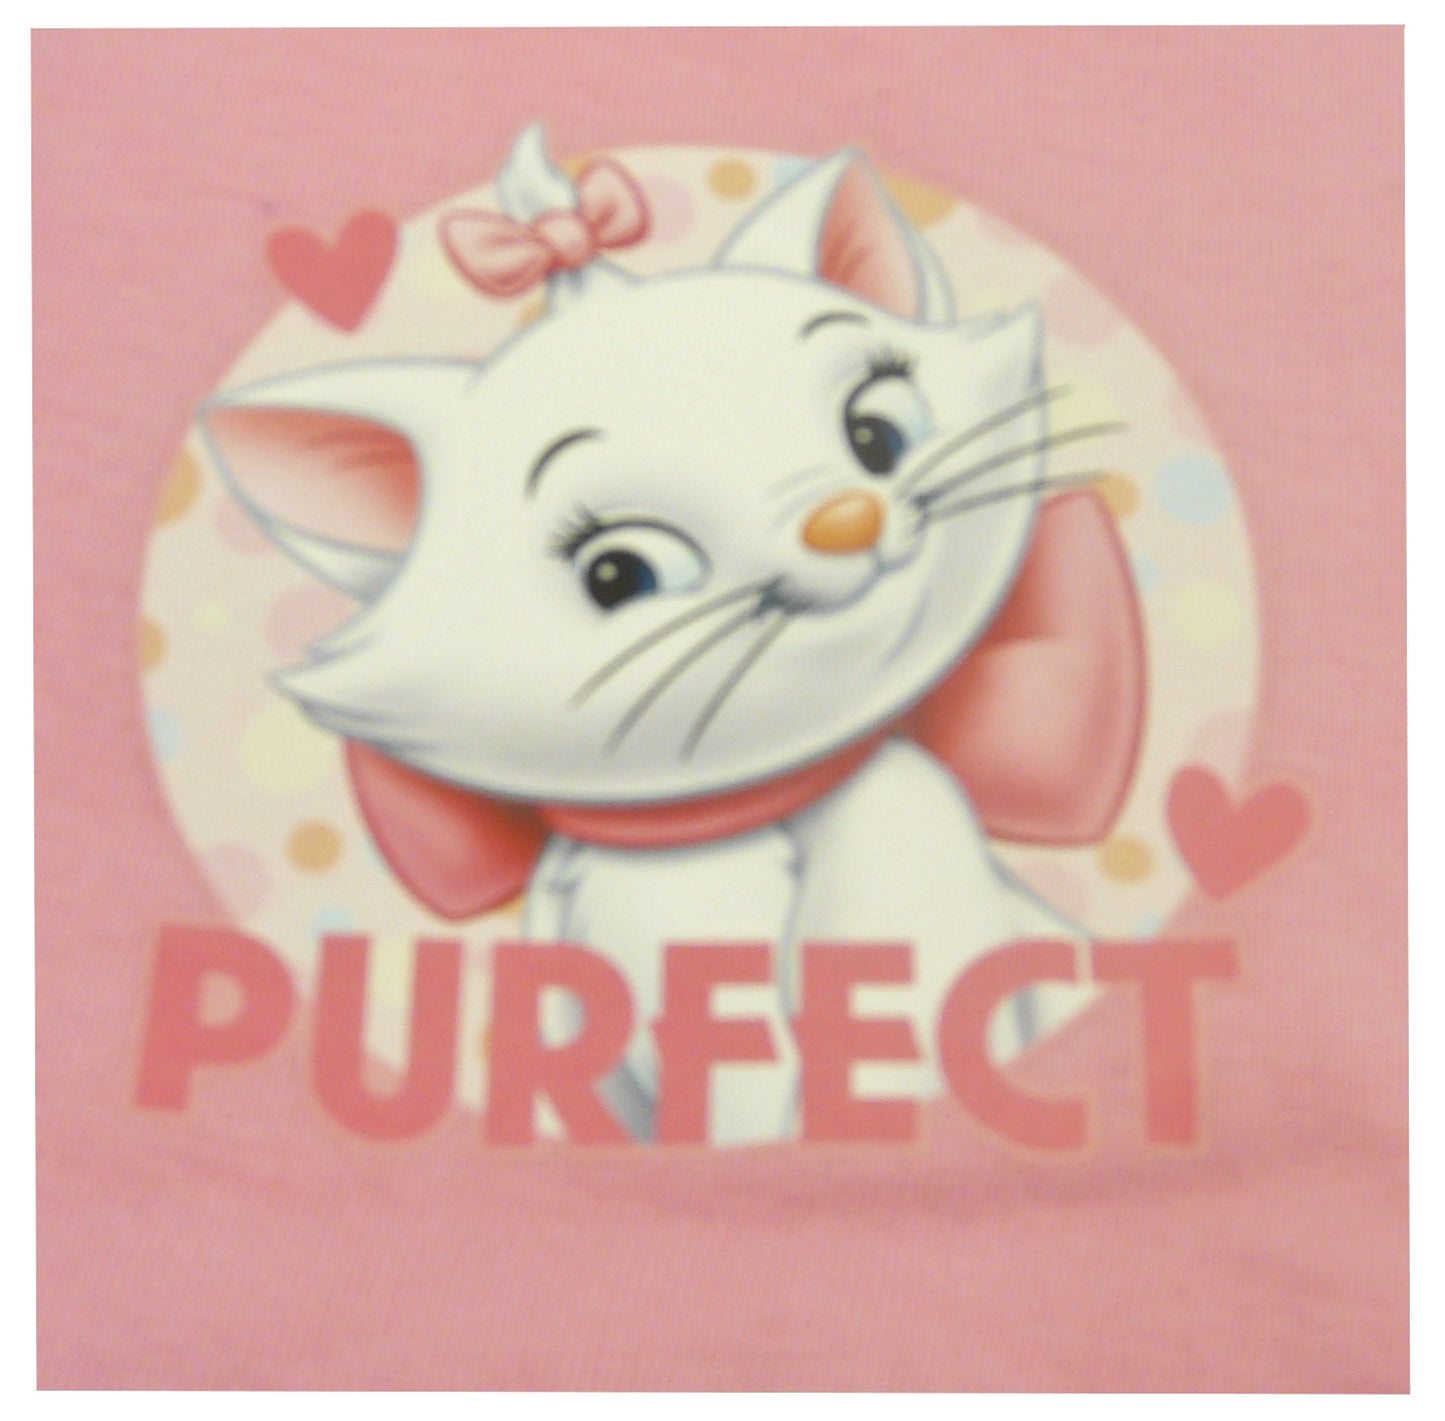 Aristocats "Purfect In Every Way" Girl's Pink Pyjamas